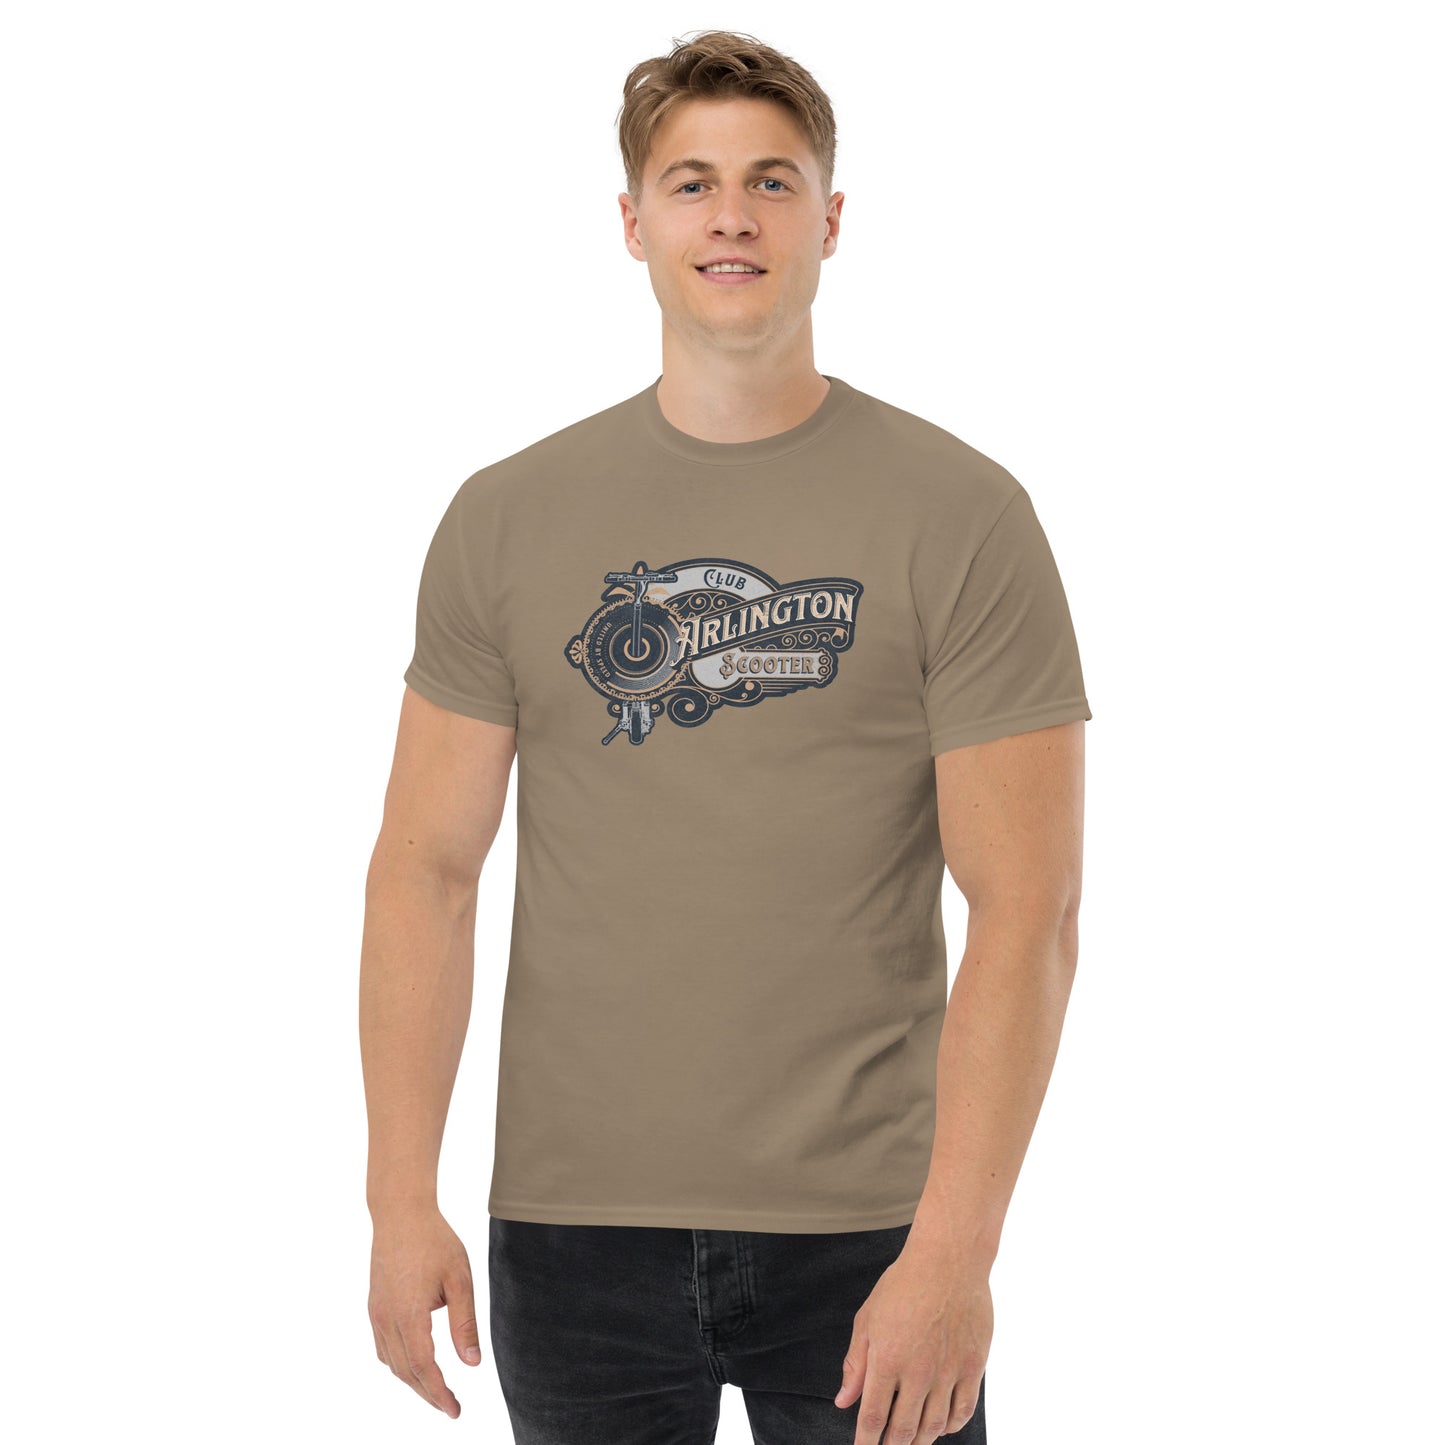 Arlington Scooter Club t-shirt